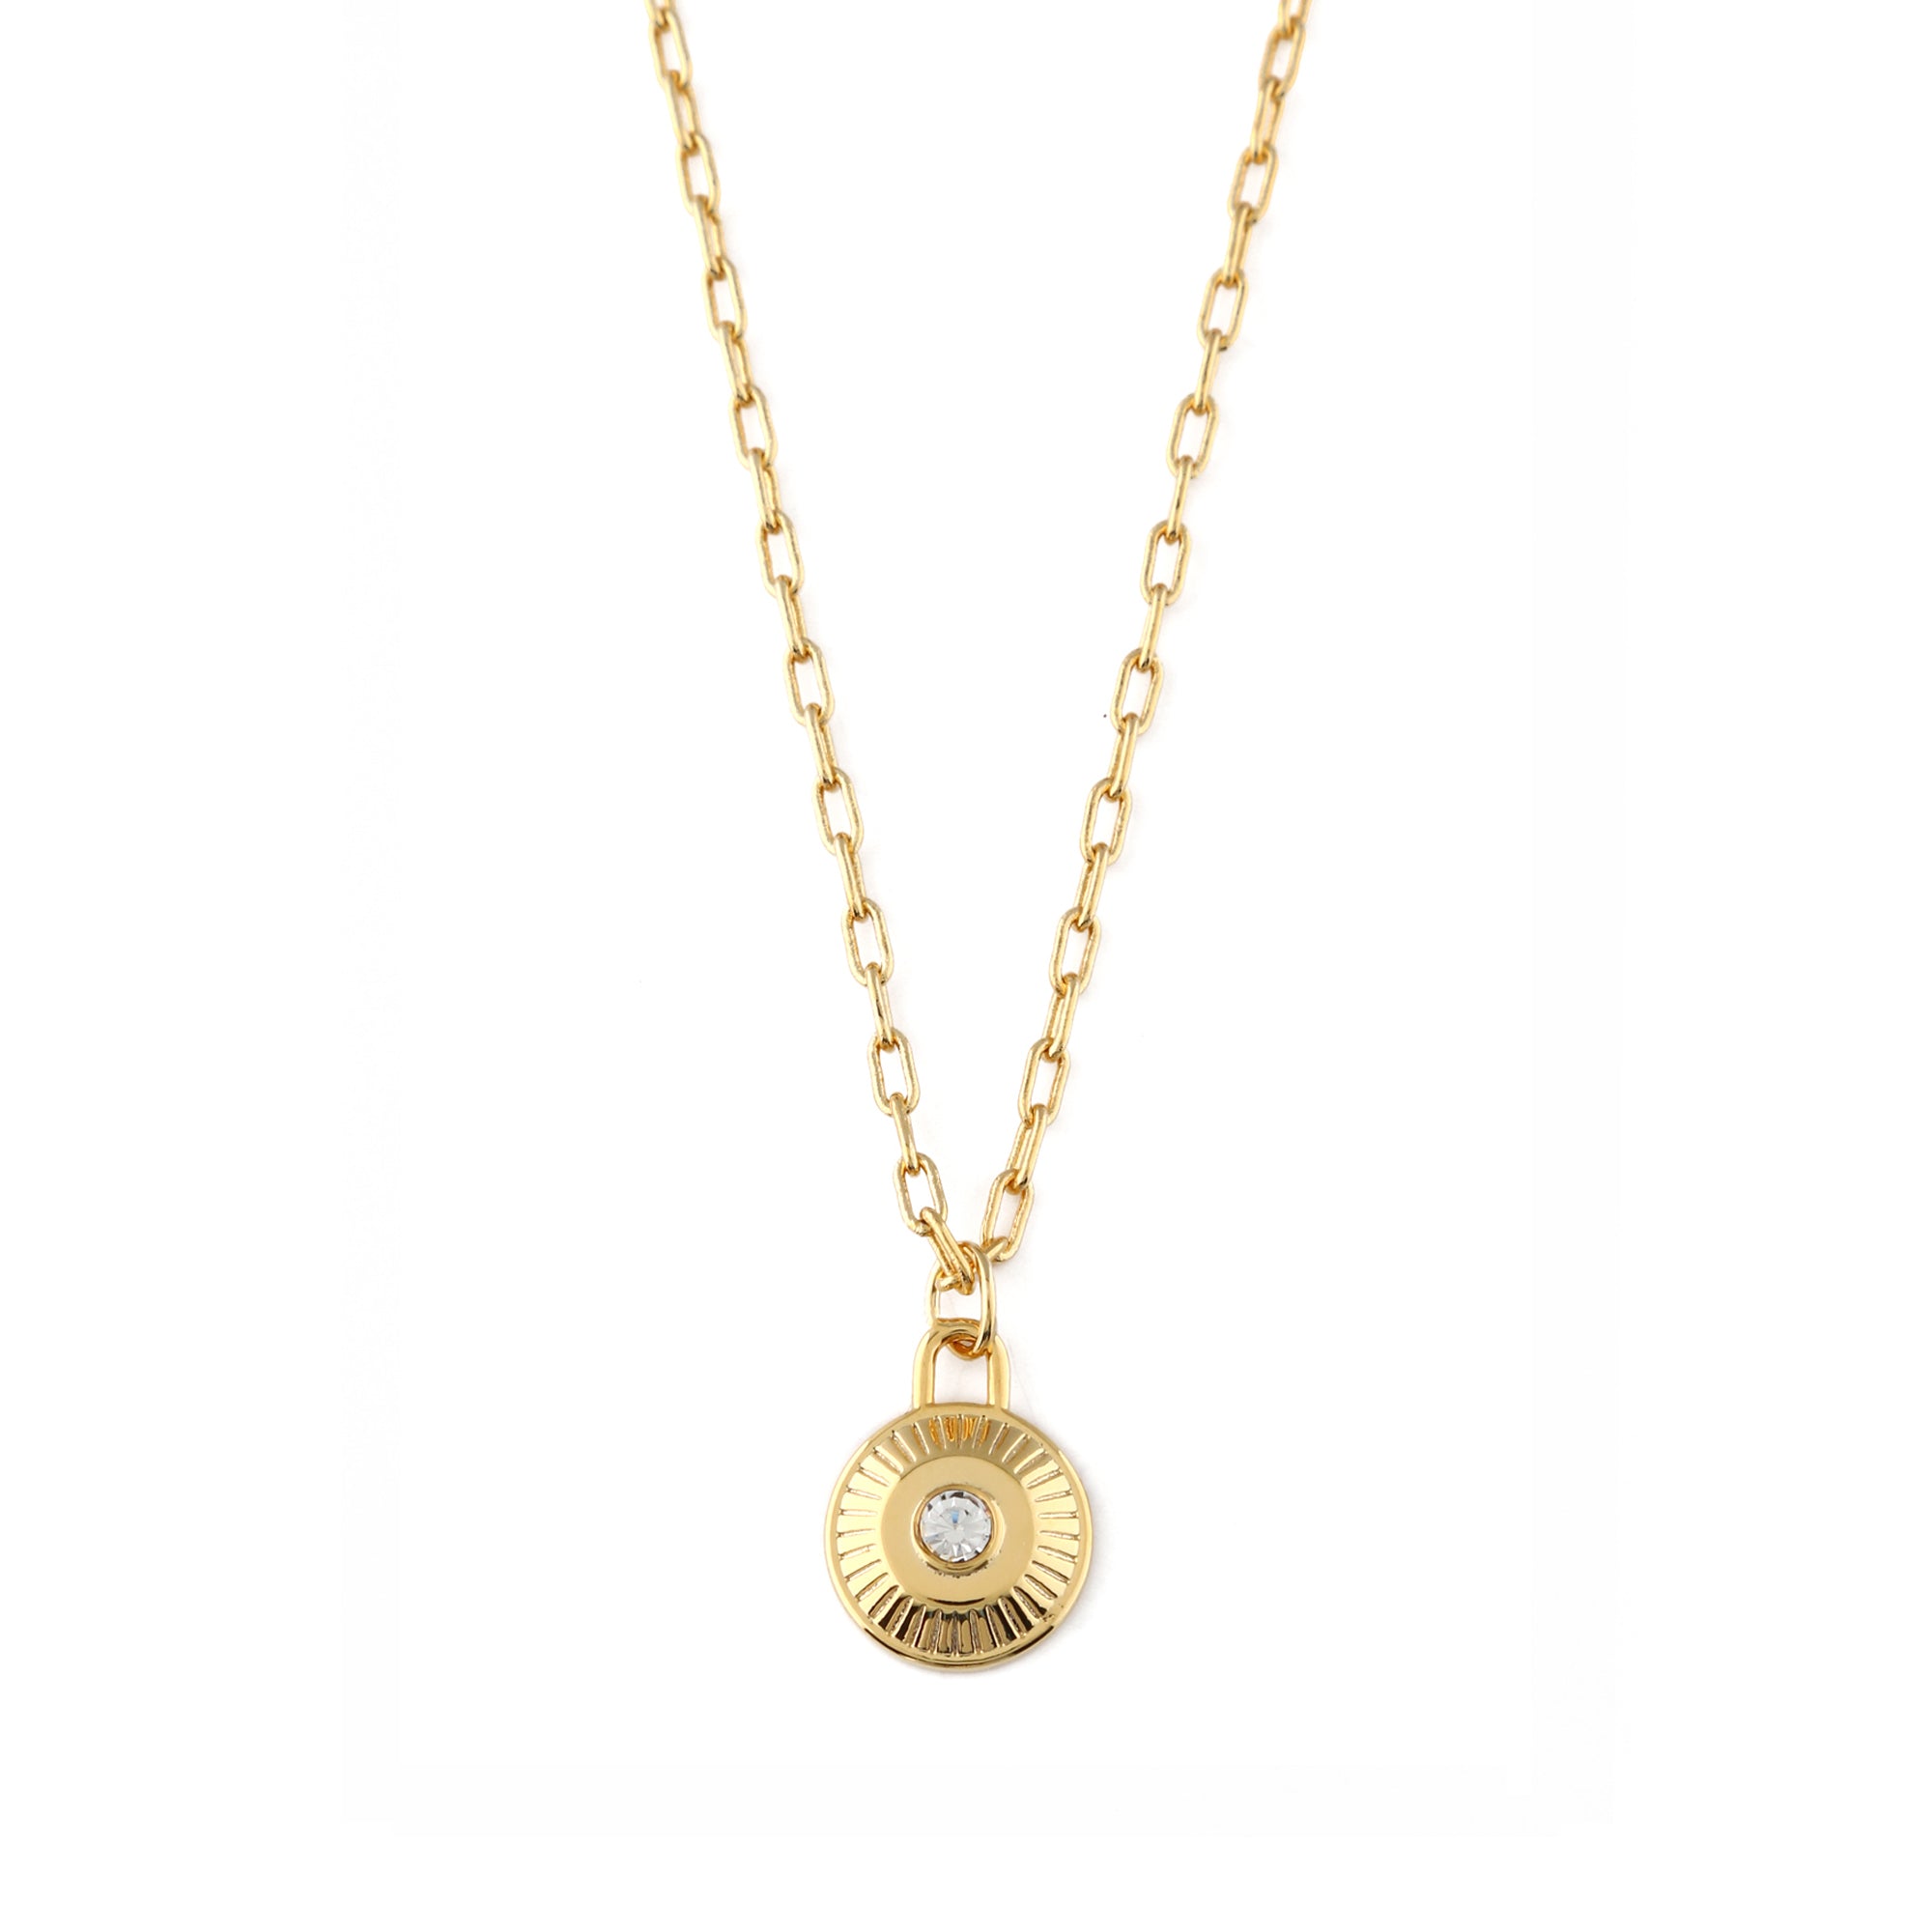 April Birthstone Necklace Made With Swarovski Crystals - Gold - Orelia London